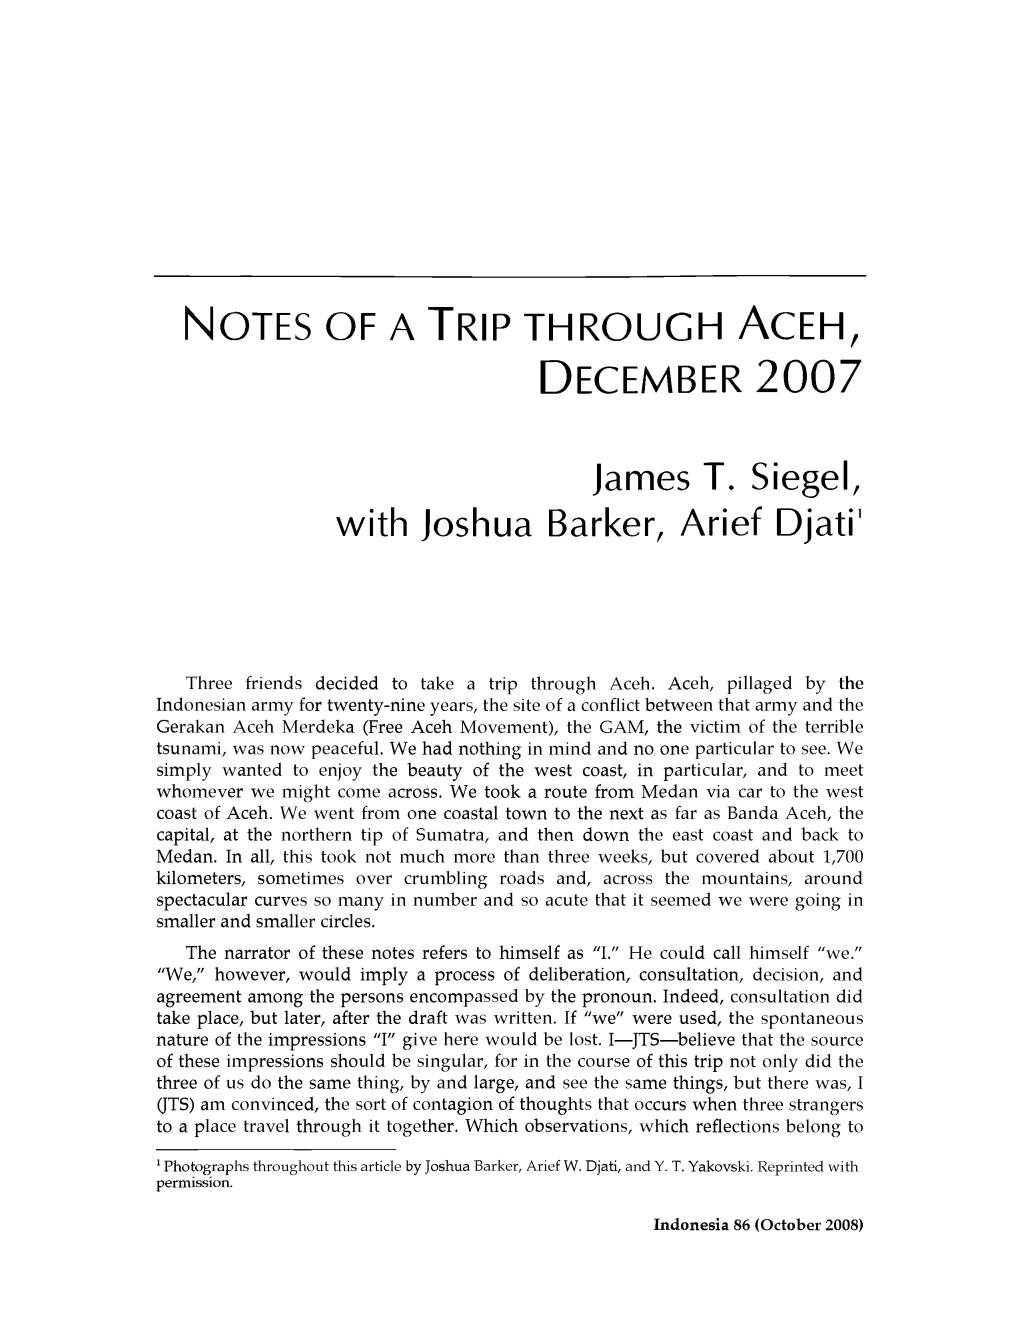 Notes of a Trip Through Aceh, December 2007